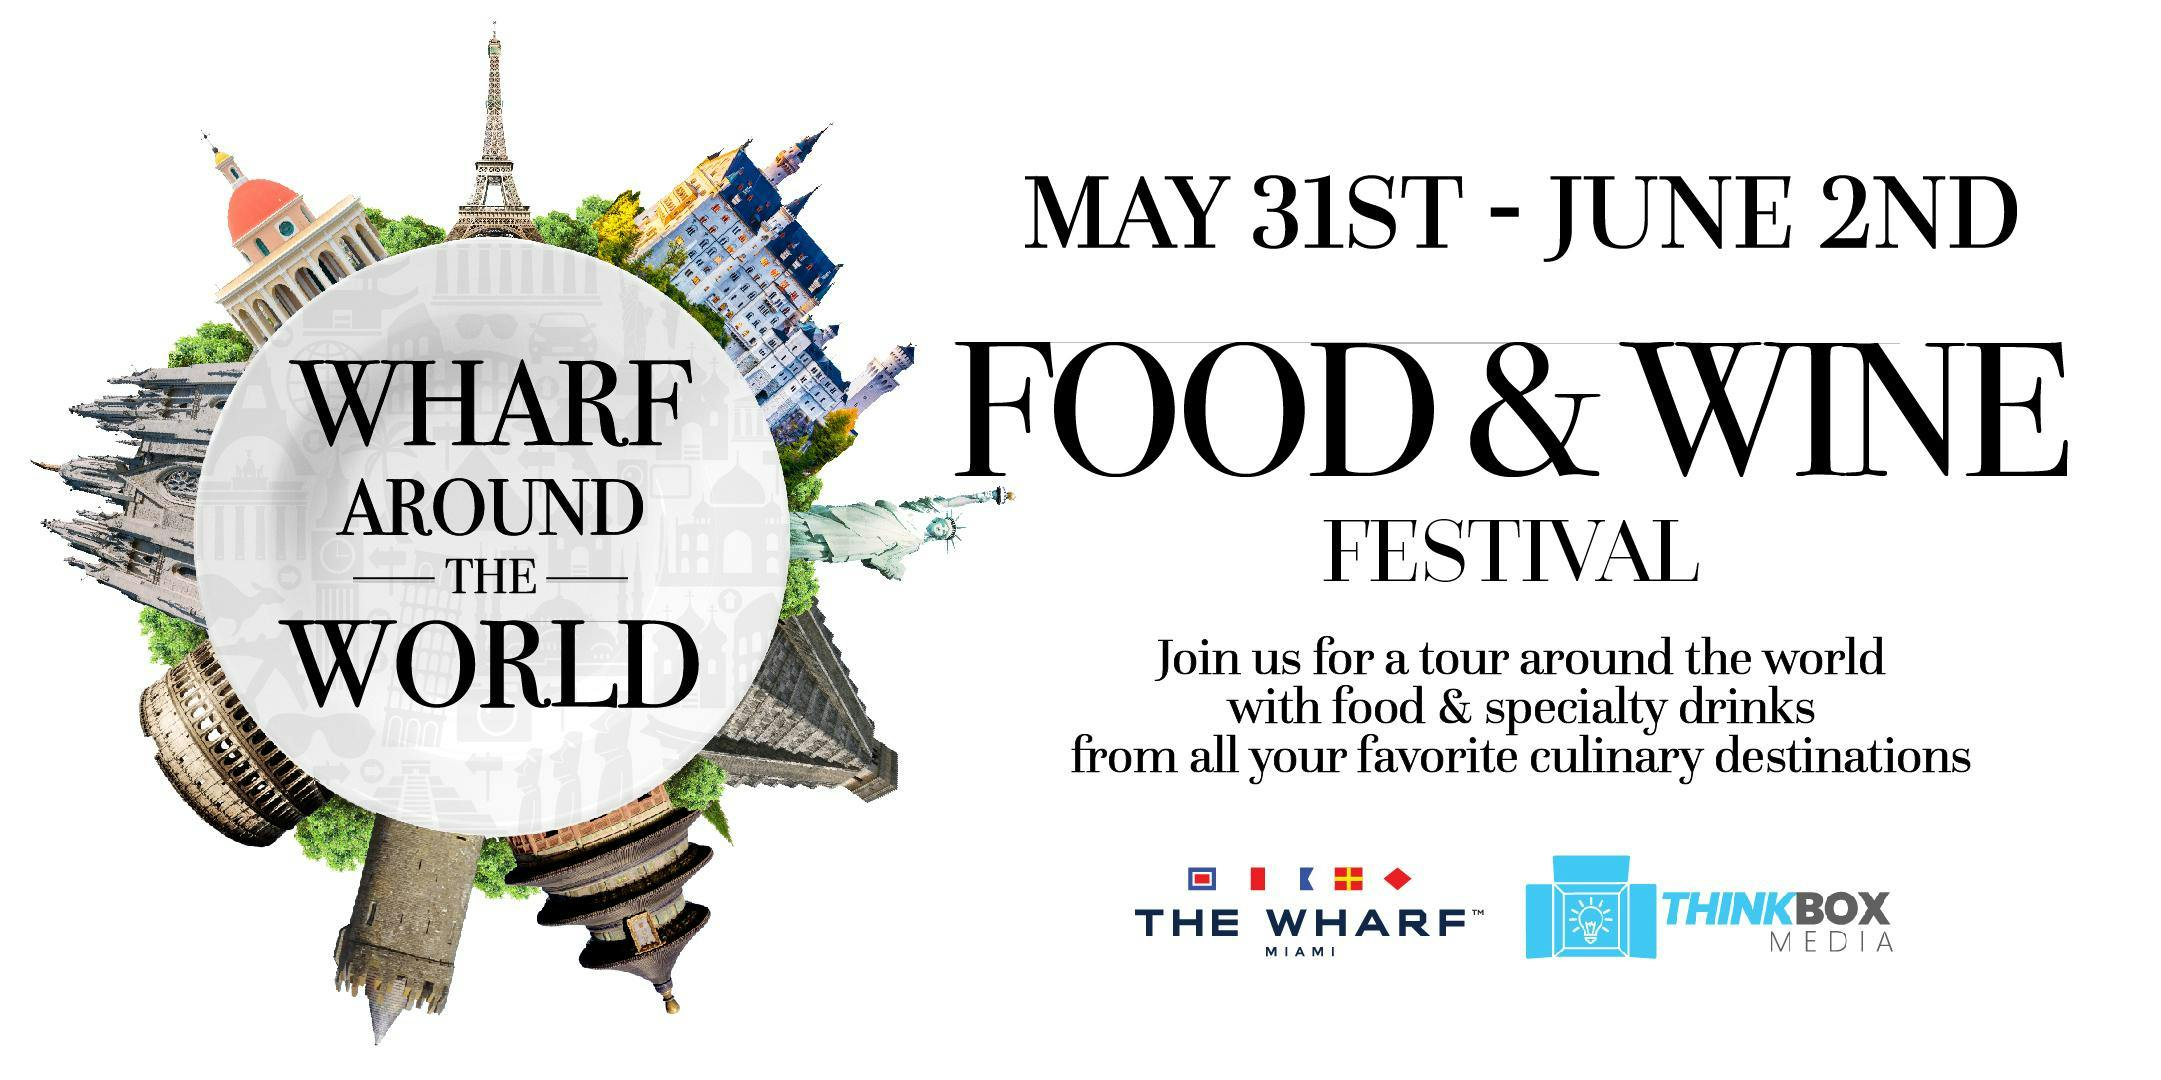 Wharf Around The World: Food & Wine Festival